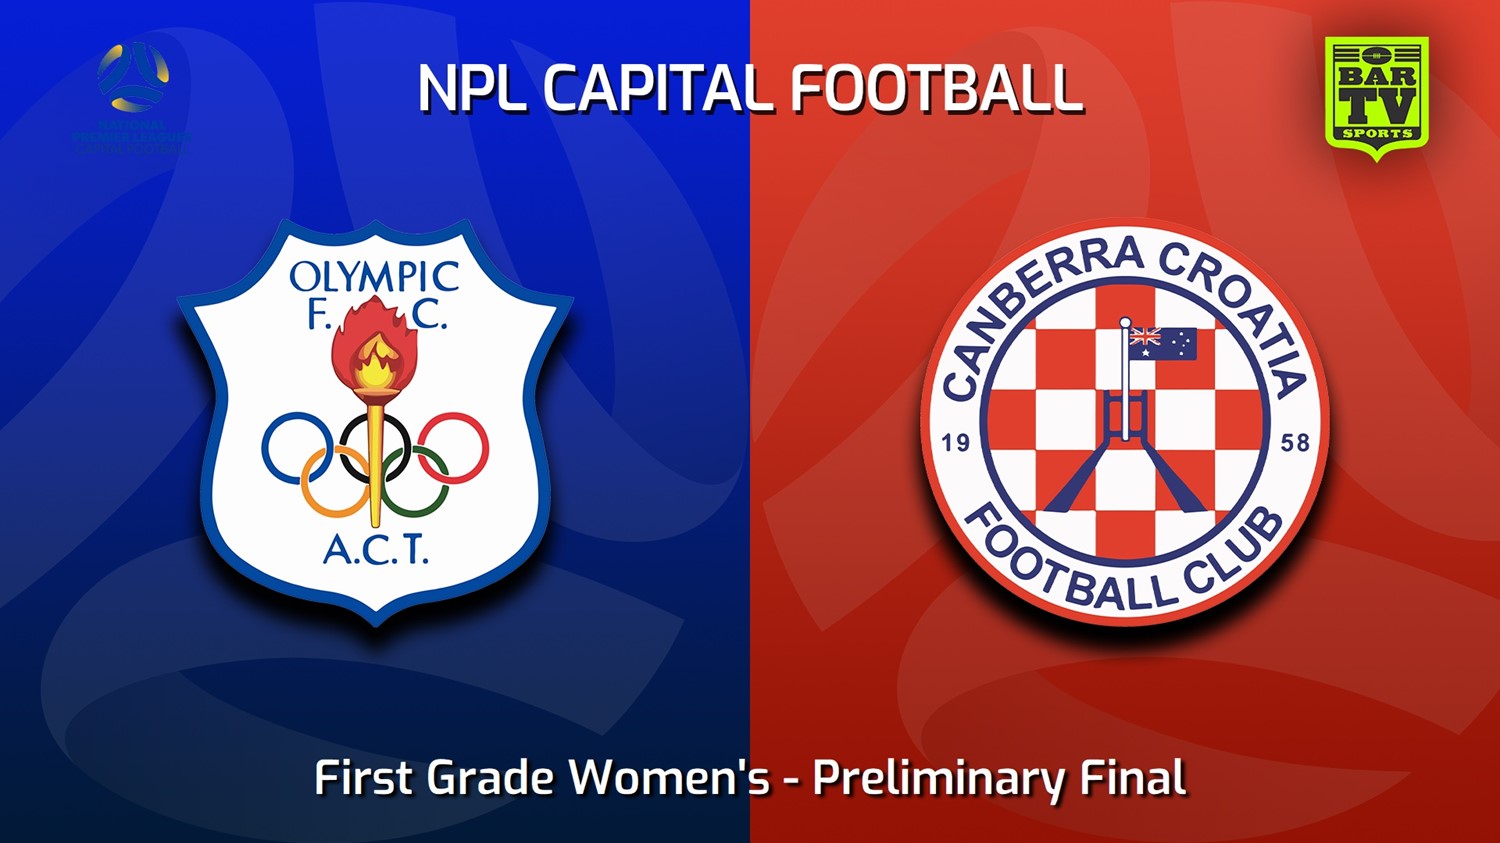 230917-NPL Women - 1st Grade - Capital Football Finals Preliminary Final - Canberra Olympic FC (women) v Canberra Croatia FC (women) Minigame Slate Image